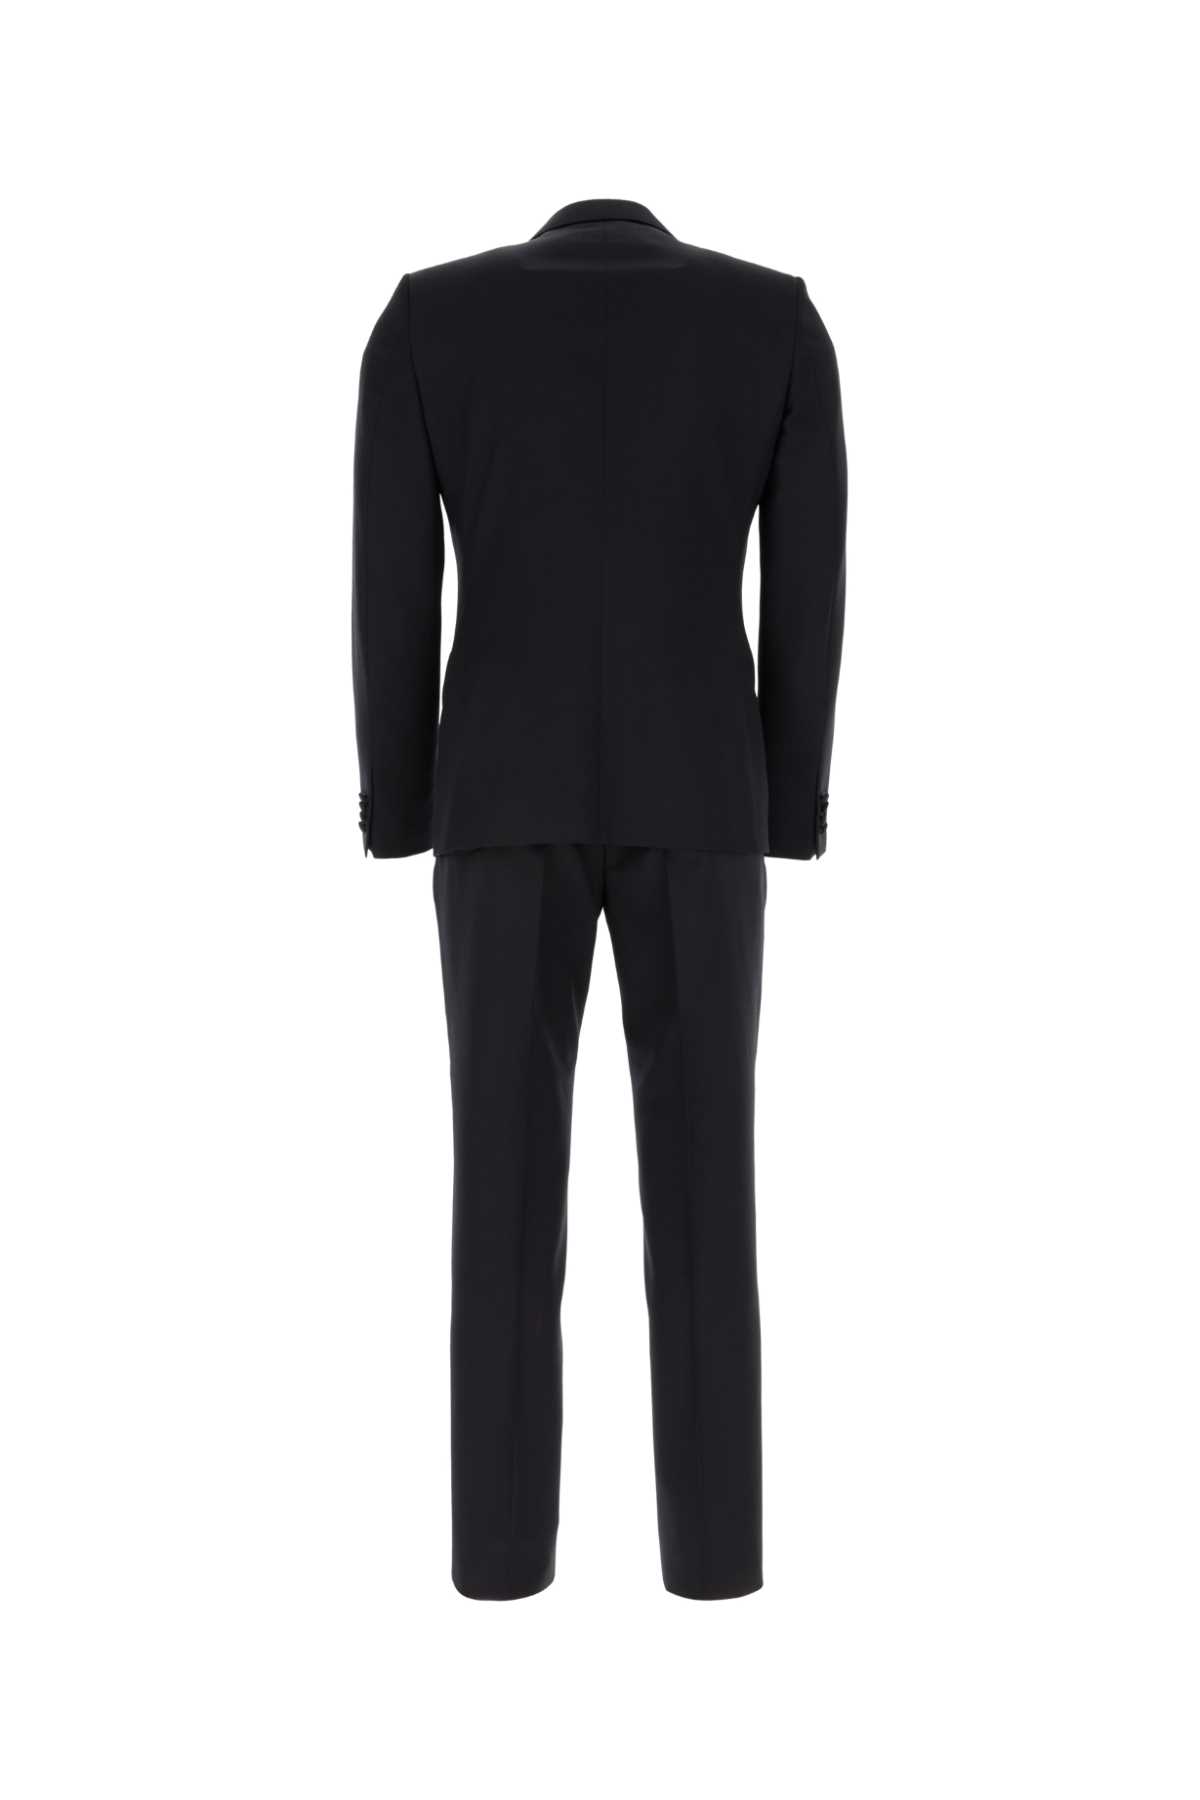 Zegna Black Wool Blend Suit In 8r